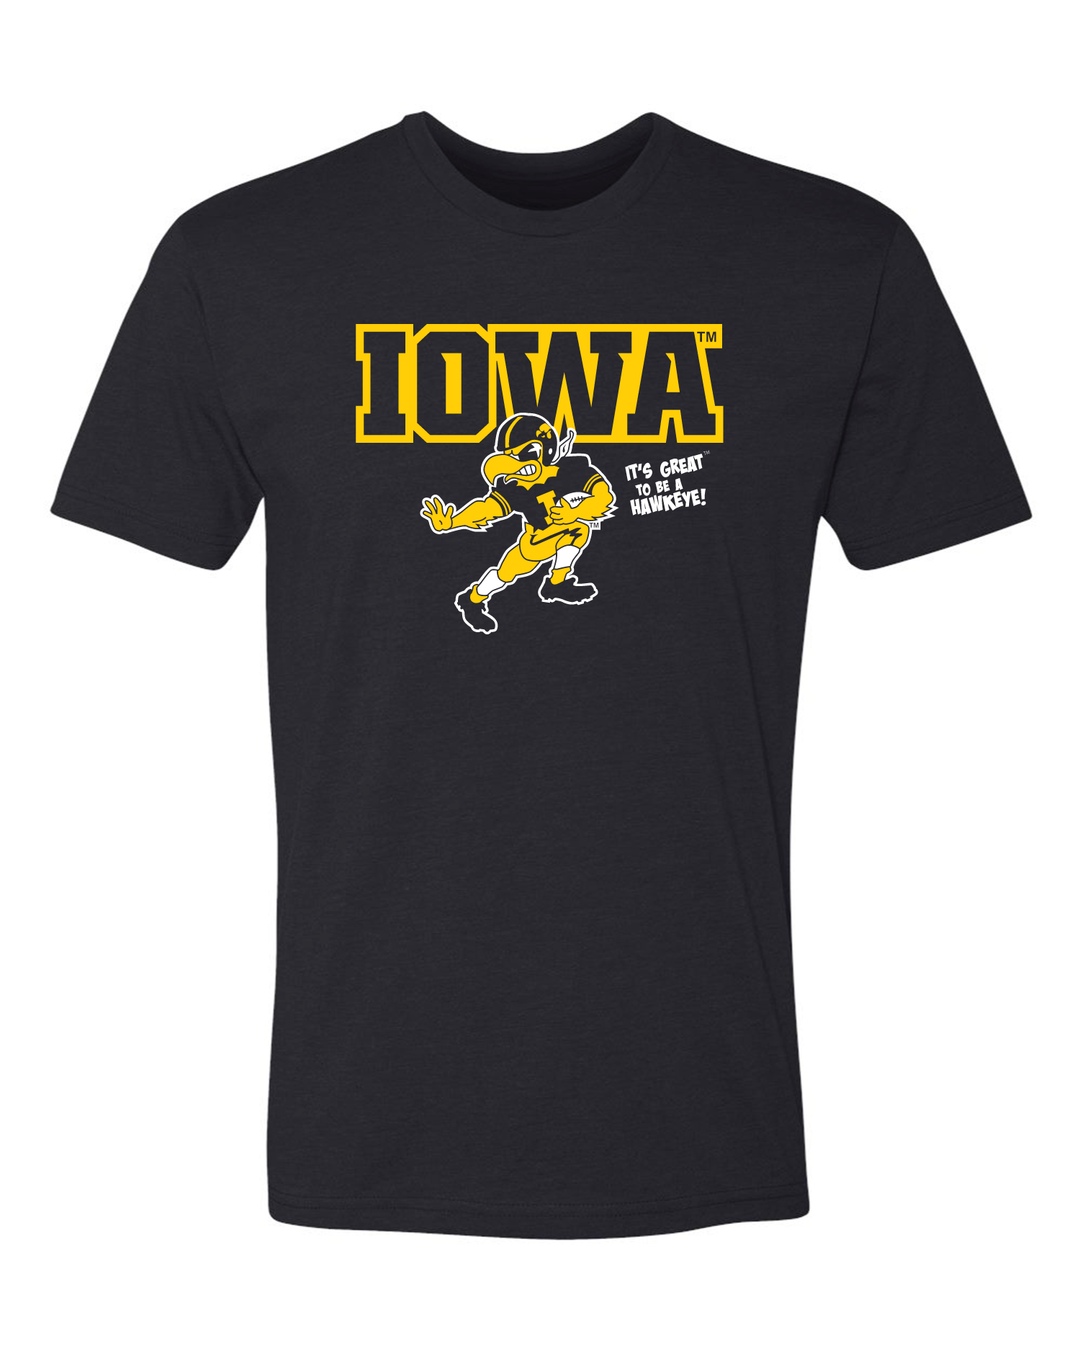 Iowa Herky Football Black T Shirt